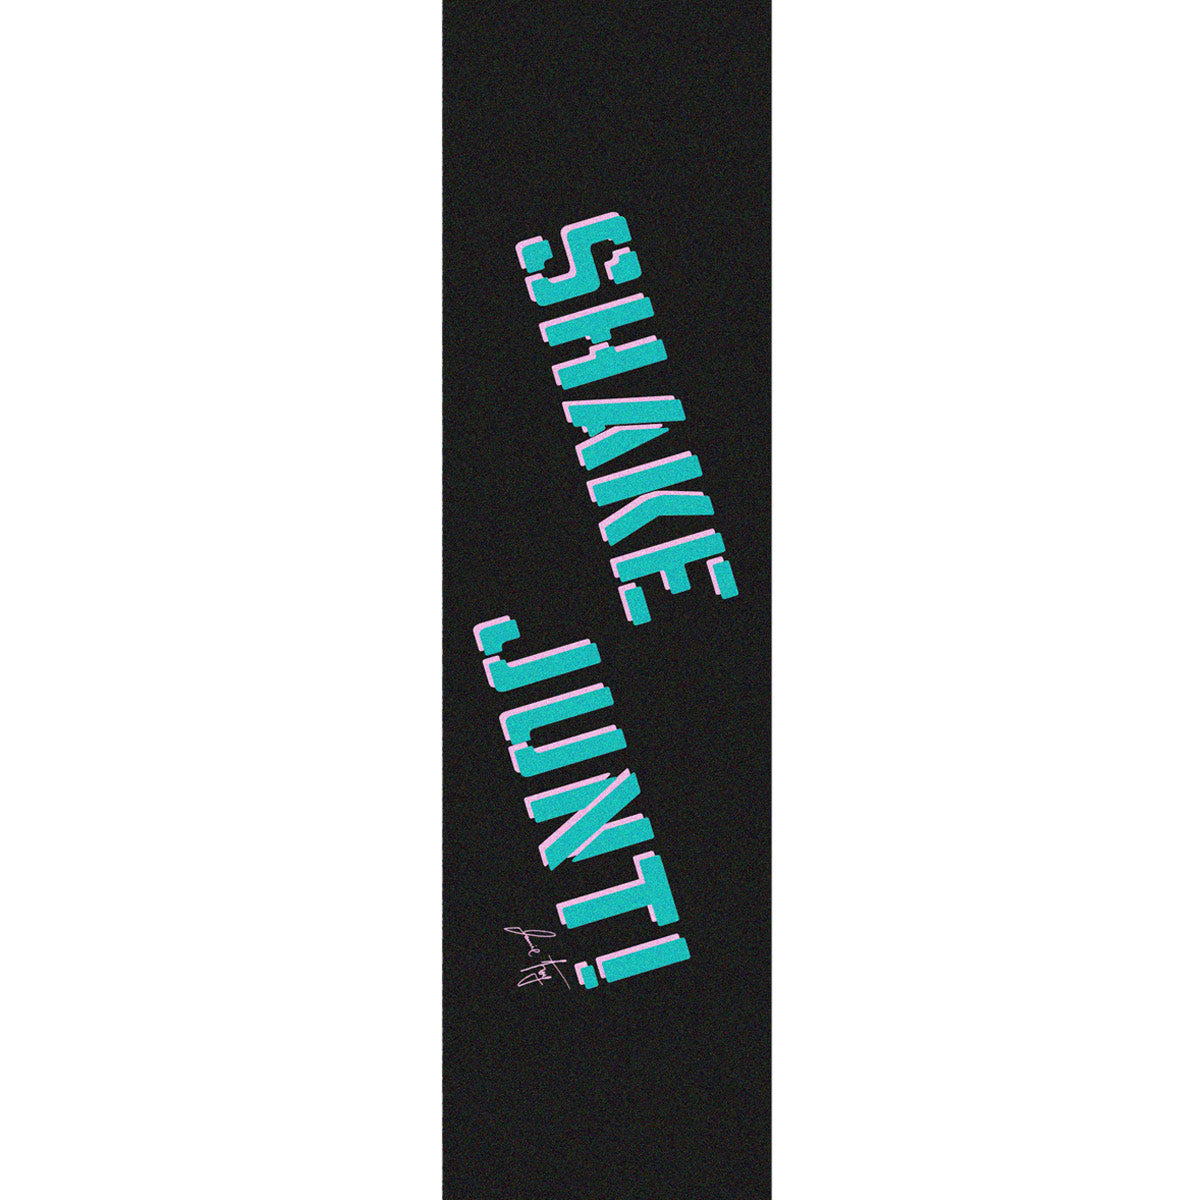 Shake Junt Jamie Foy Grip tape image 1